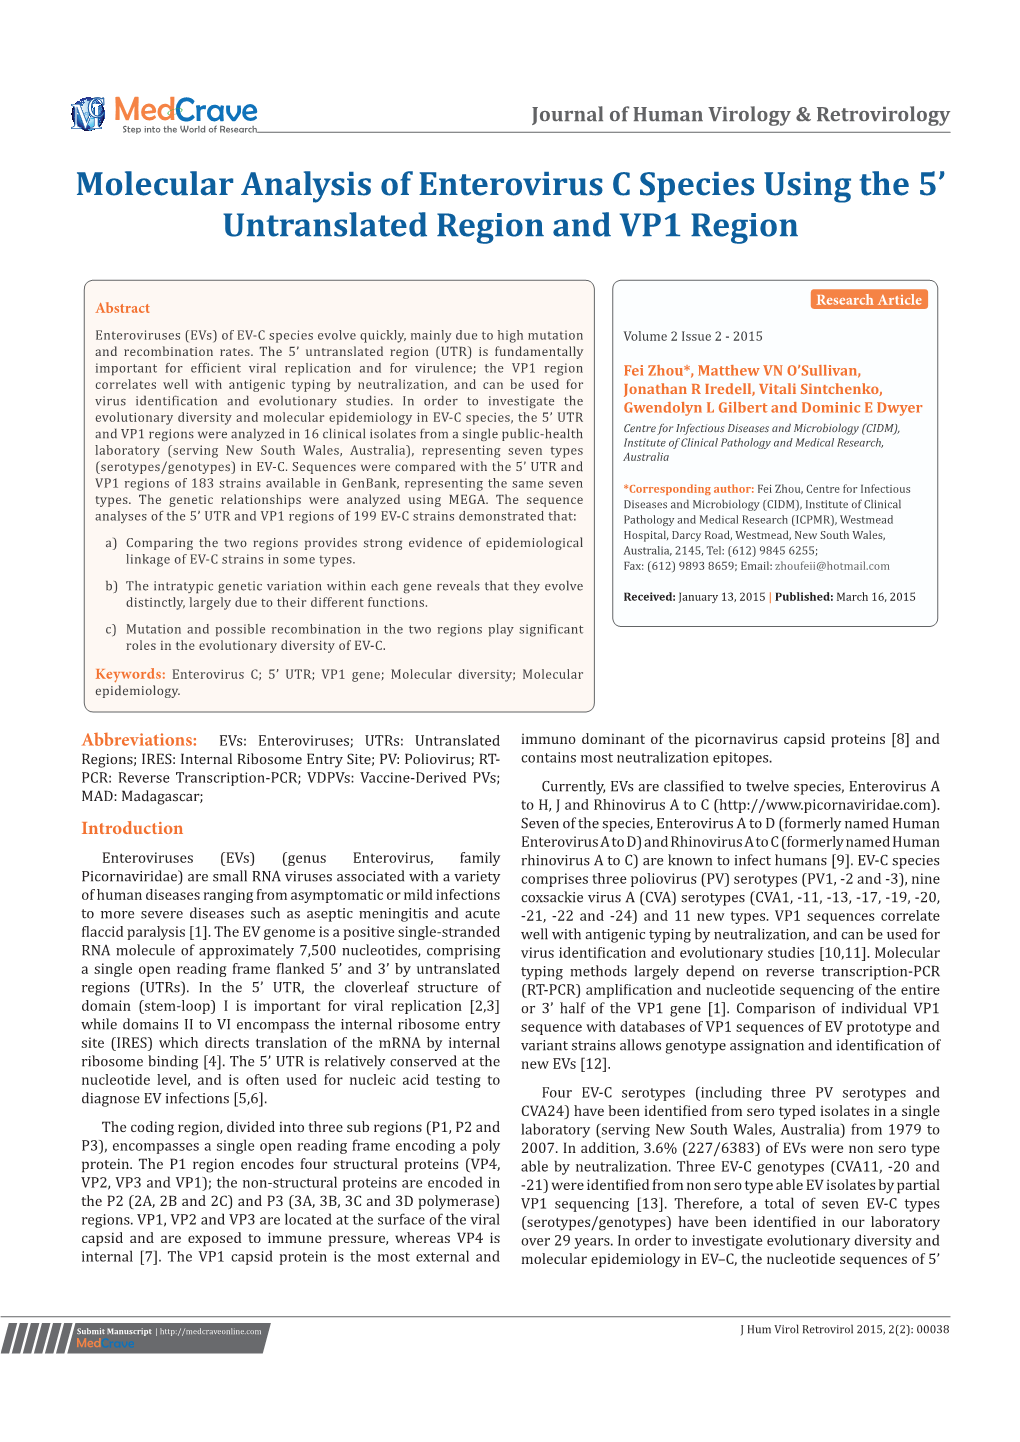 Molecular Analysis of Enterovirus C Species Using the 5' Untranslated Region and VP1 Region